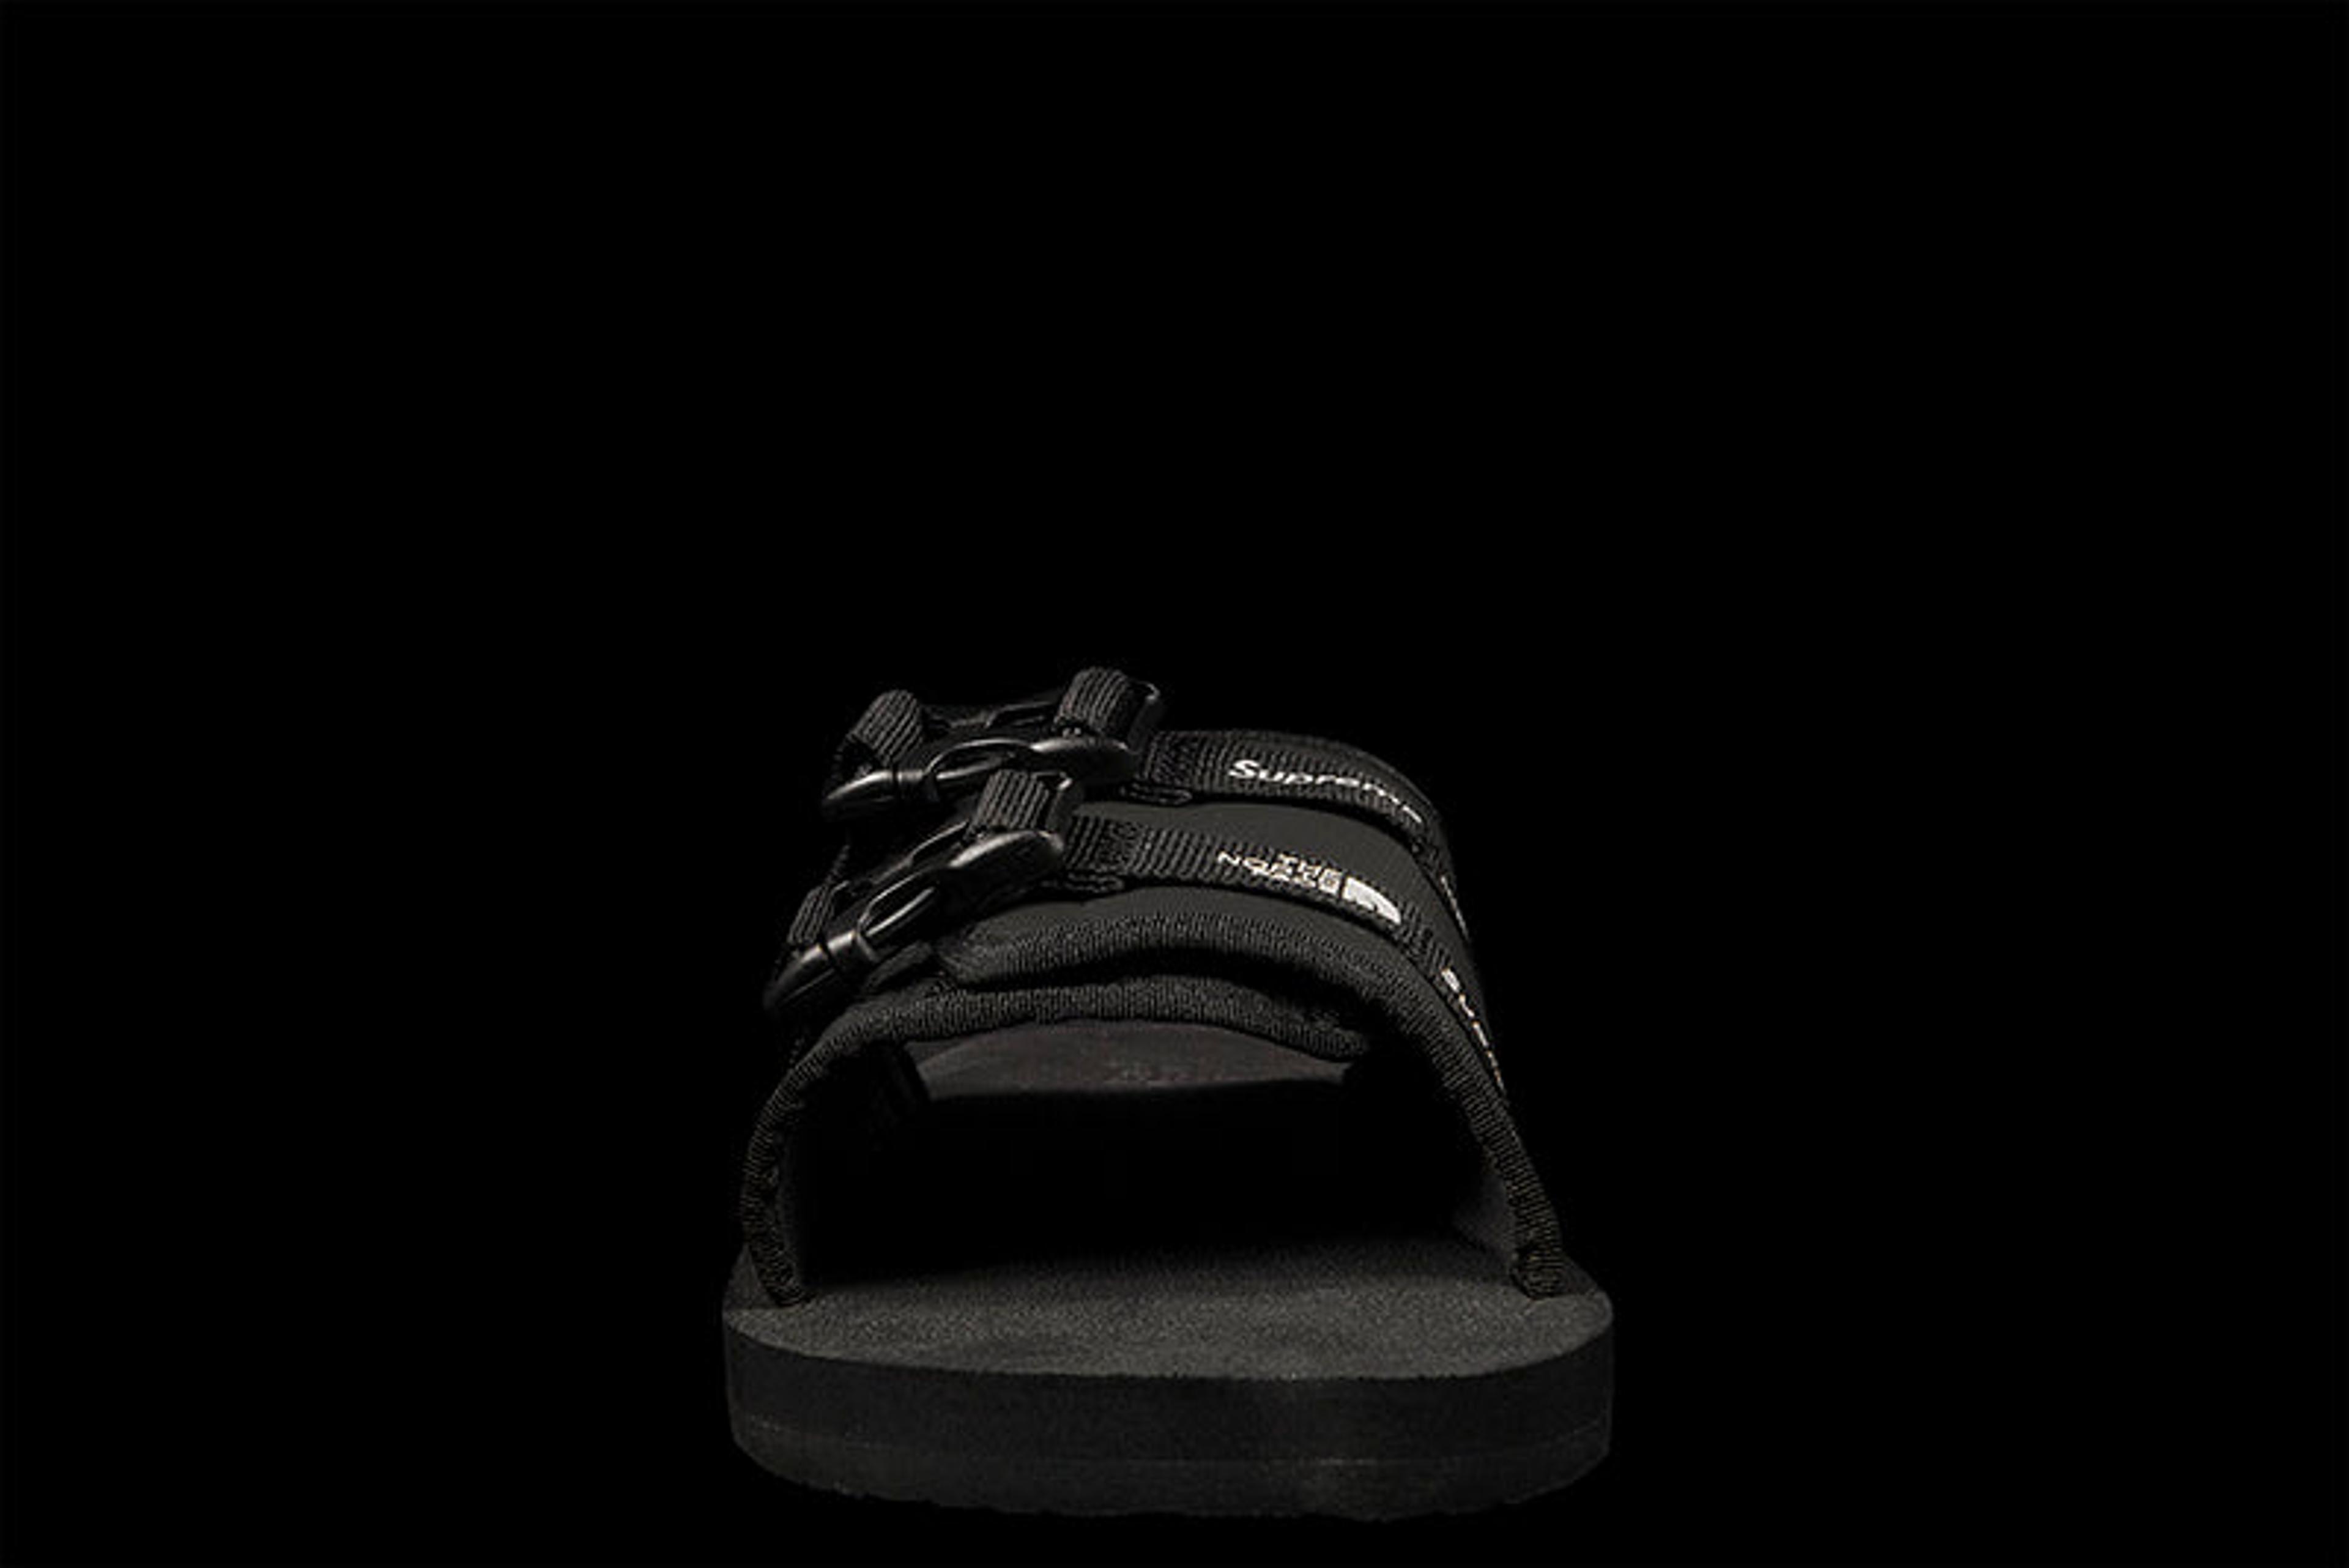 Supreme The North Face Trekking Sandal - Size 8 Black New